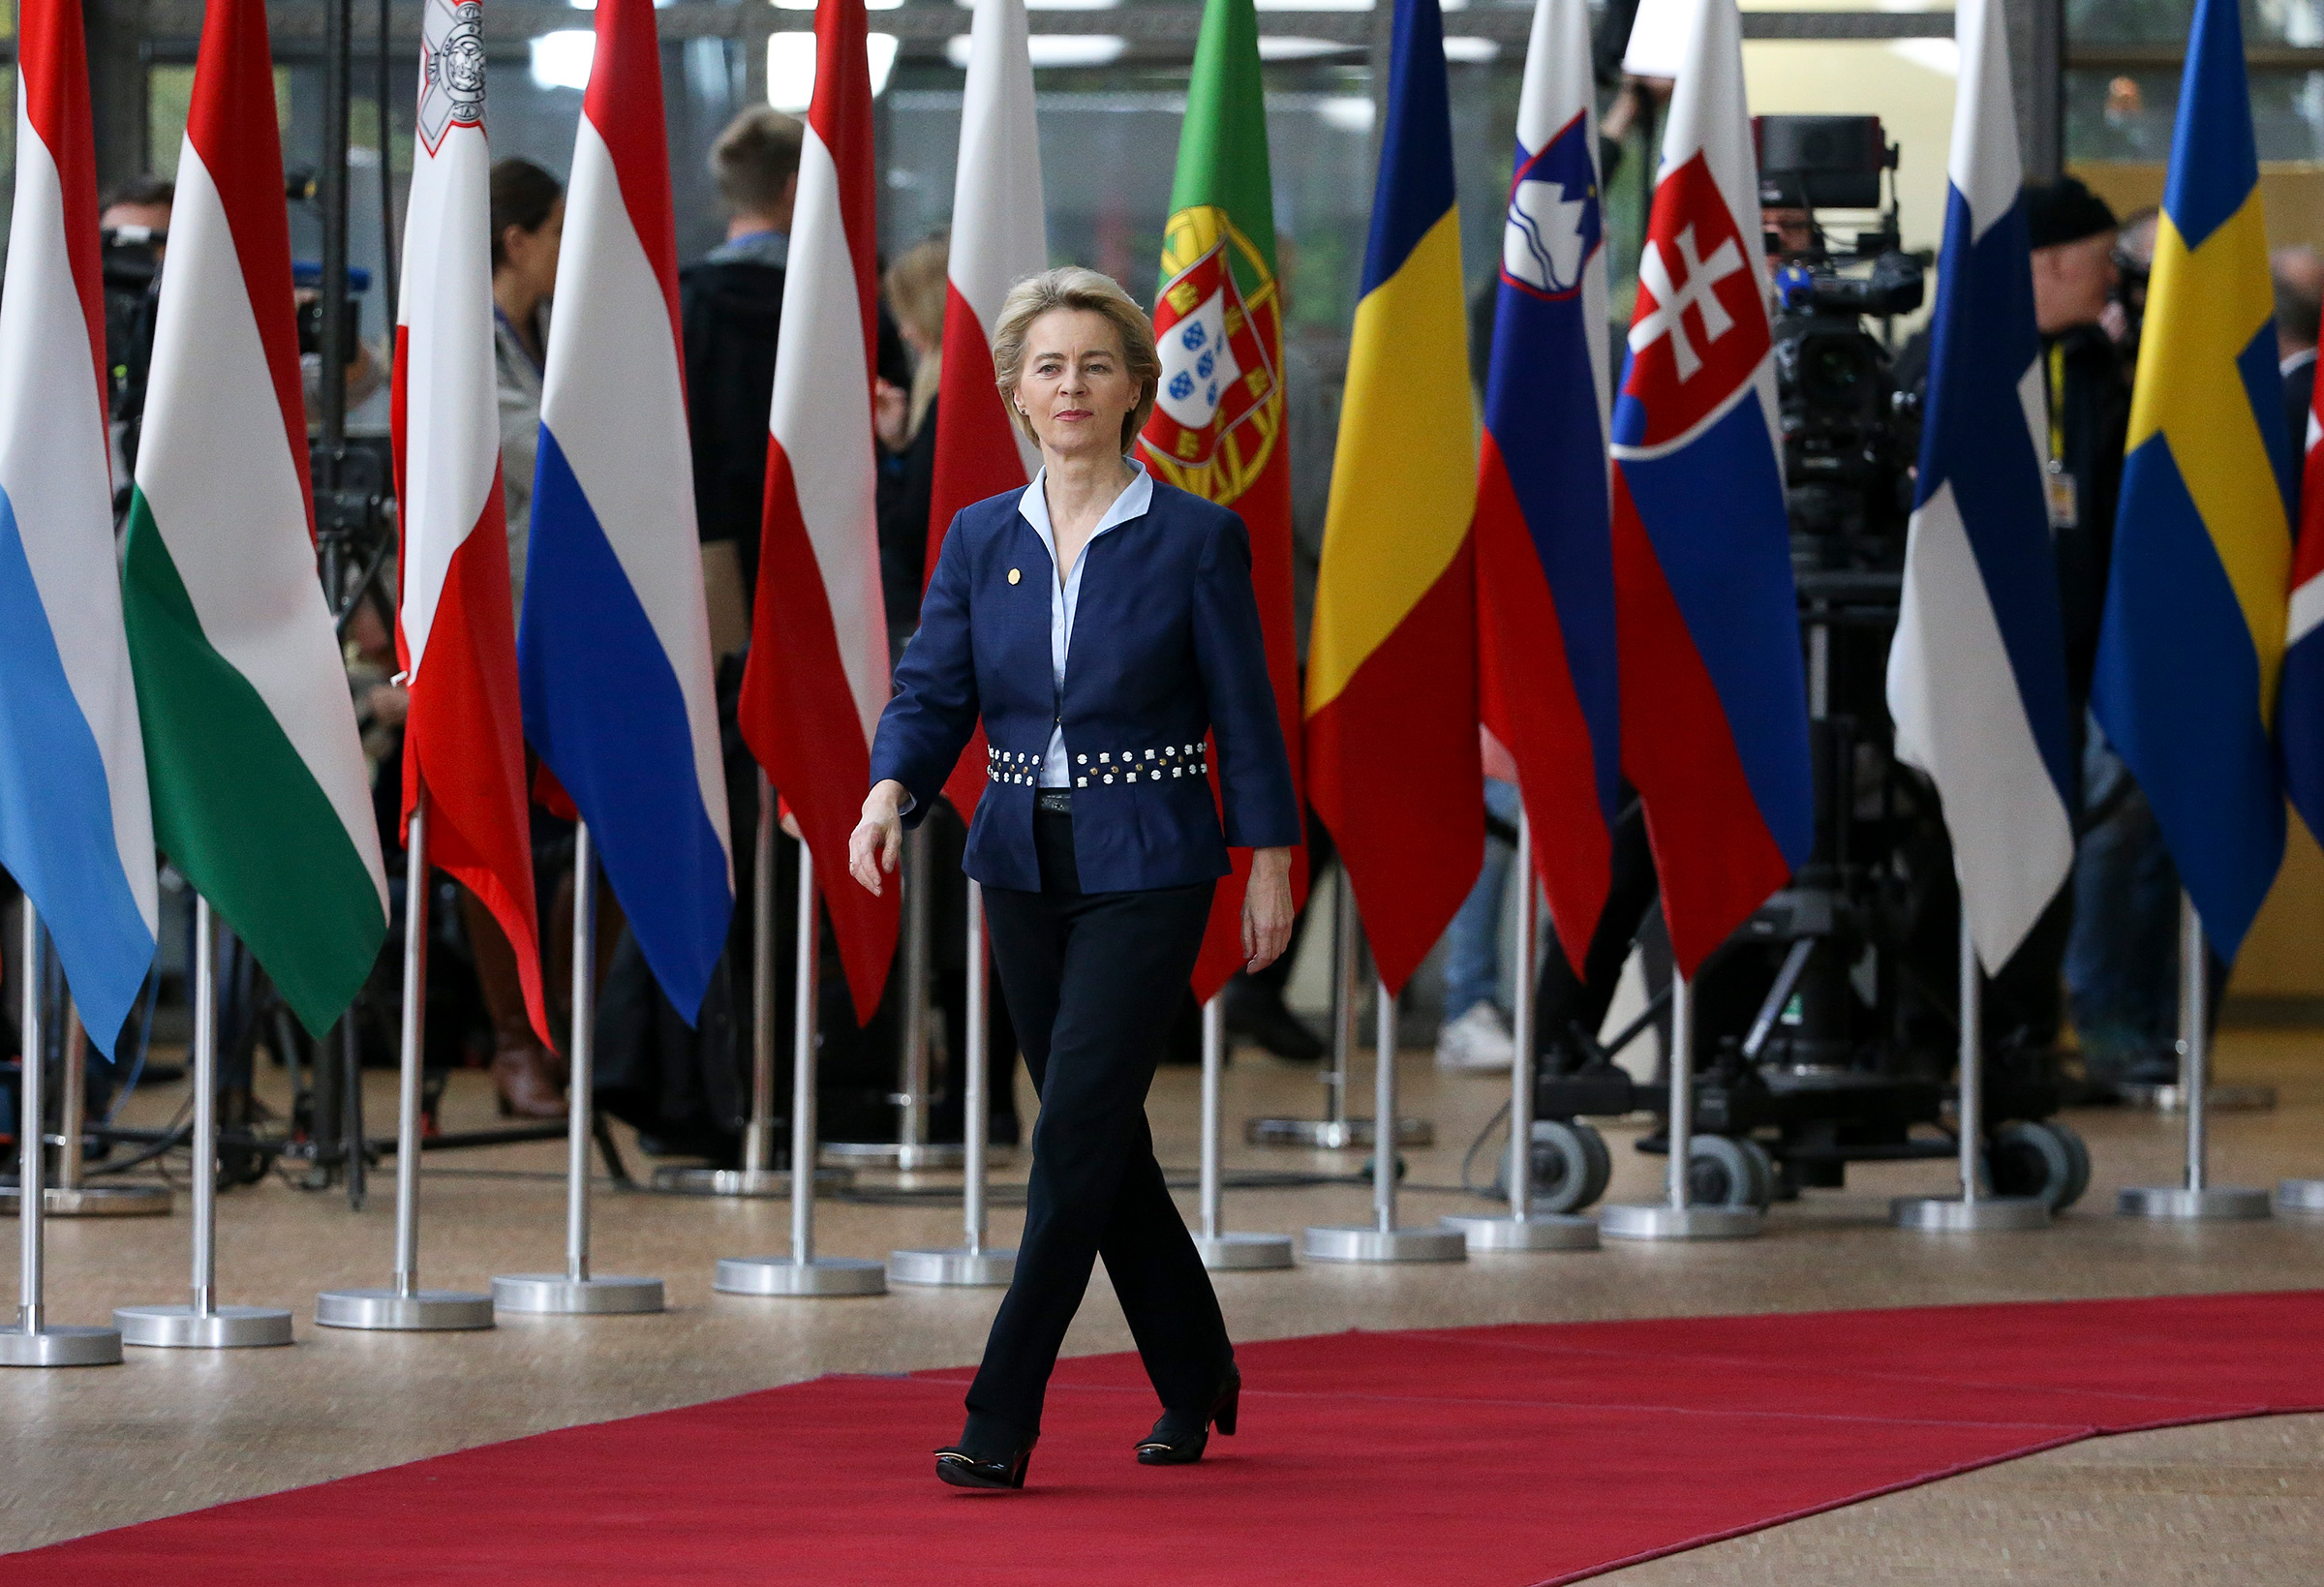 President of the European Commission Ursula von der Leyen arrives for the December European Council in Brussels on Dec. 12, 2019.